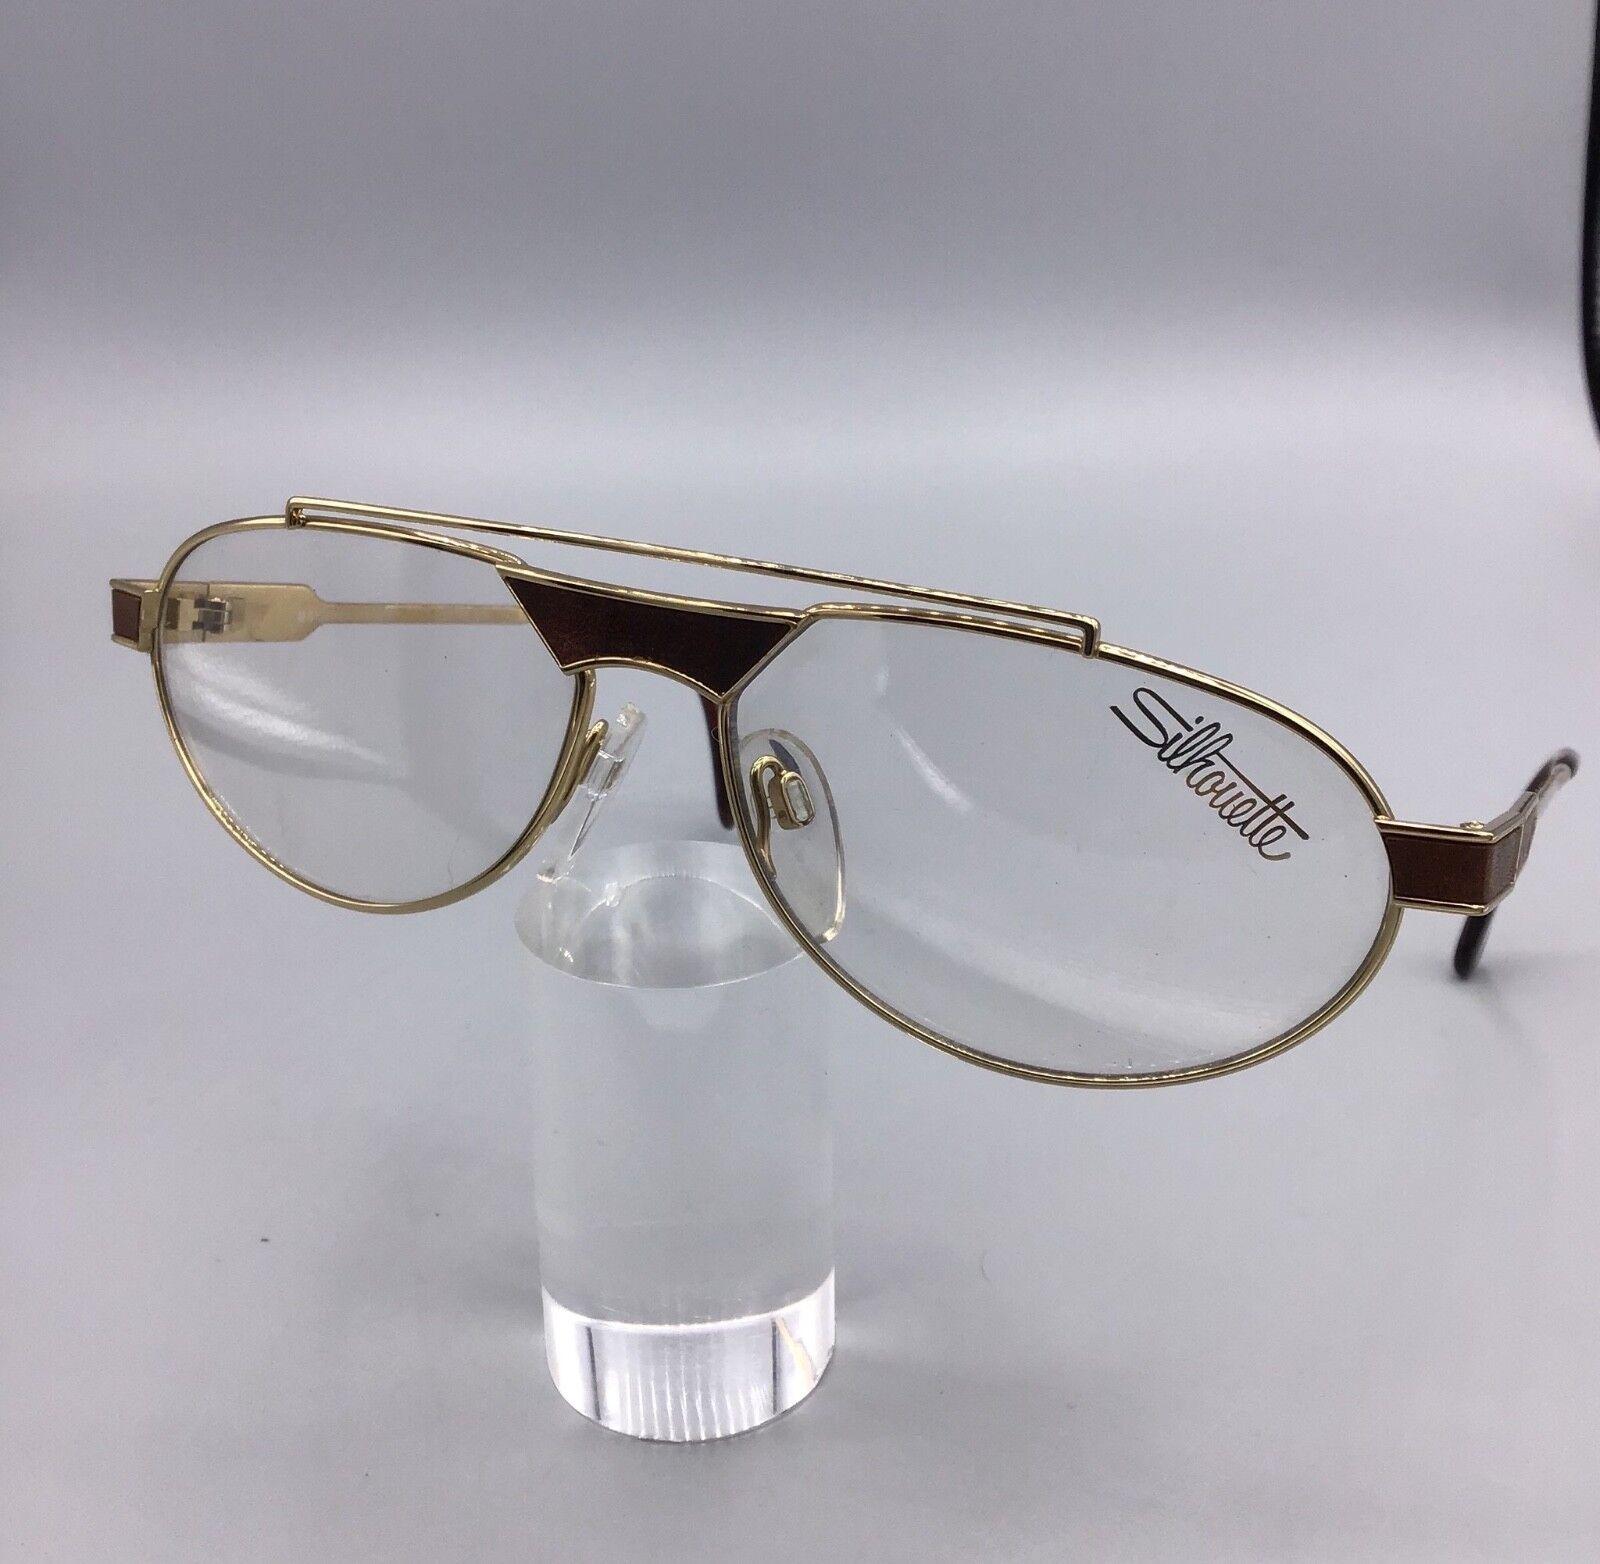 Silhouette occhiale vintage brillen eyewear frame lunettes M6161/30 V6053